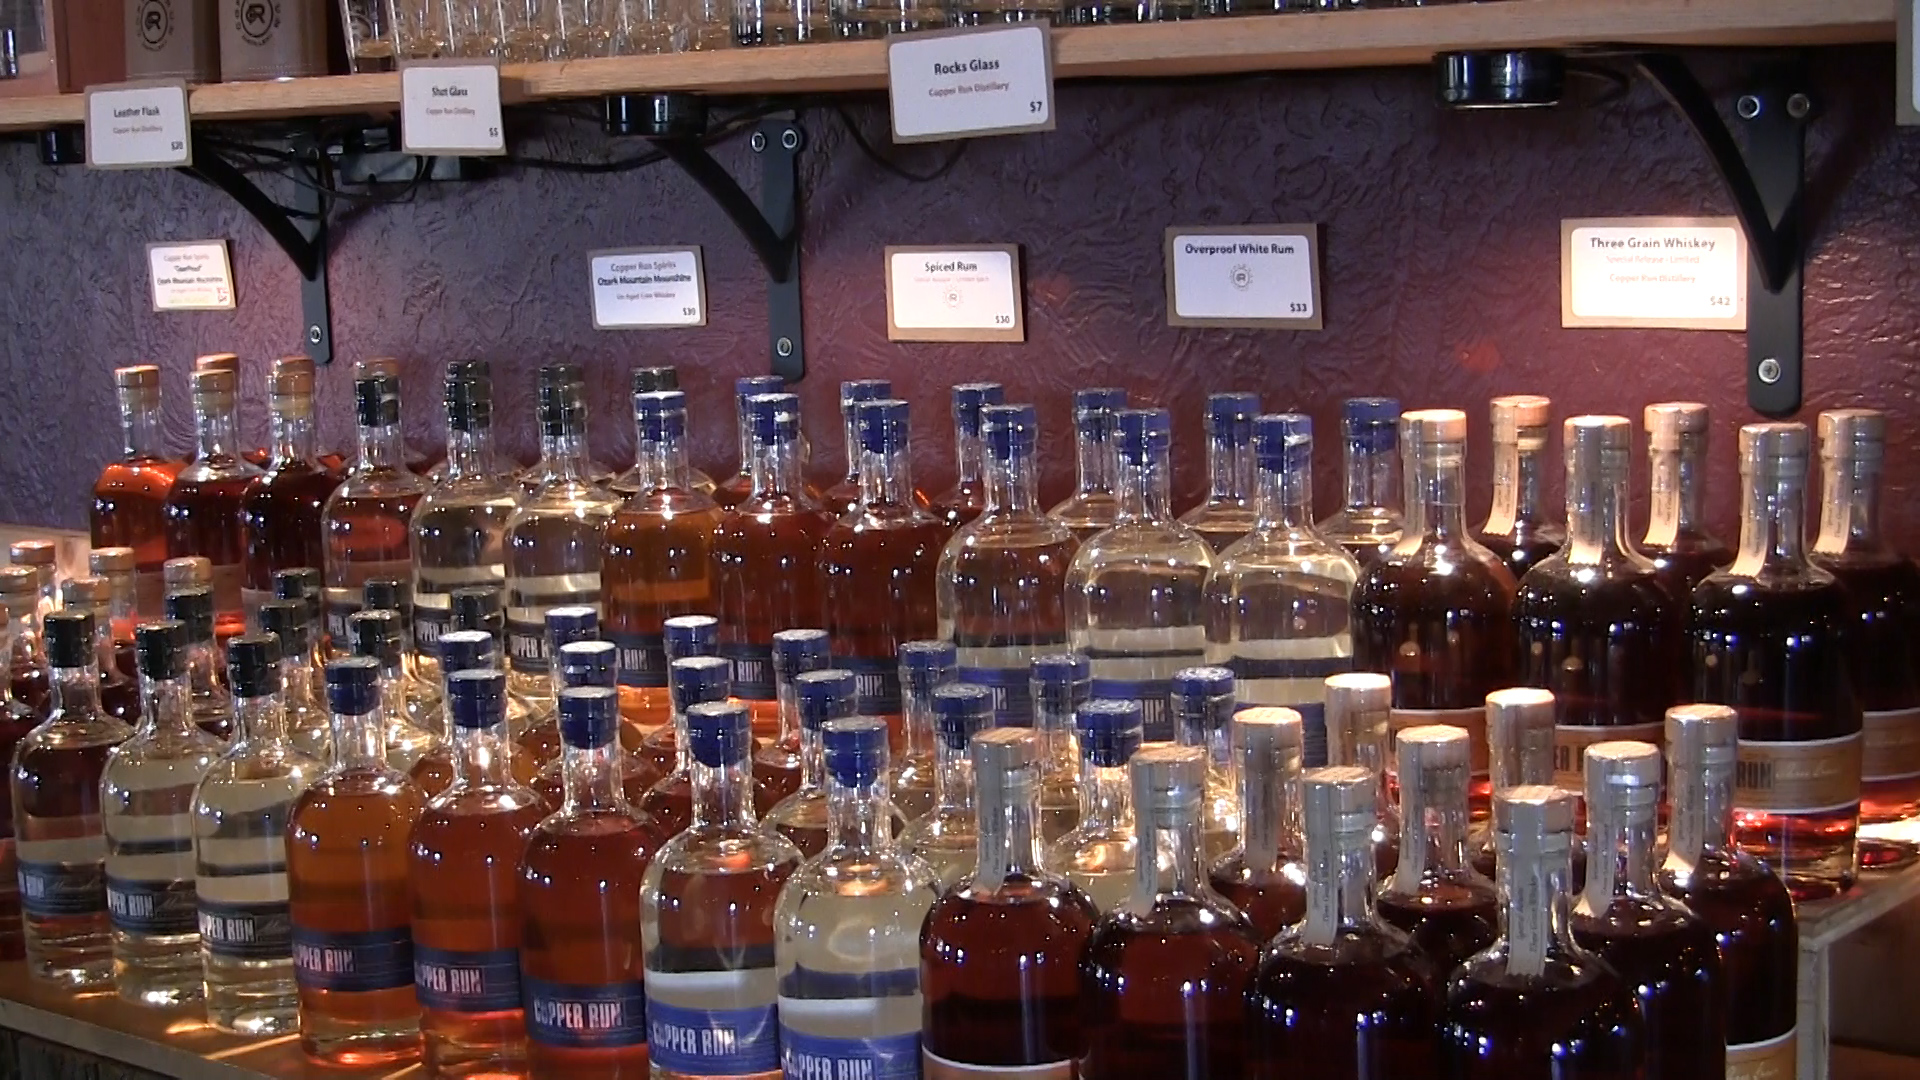 Copper Run Distillery: A Small Business Growing Deep Roots